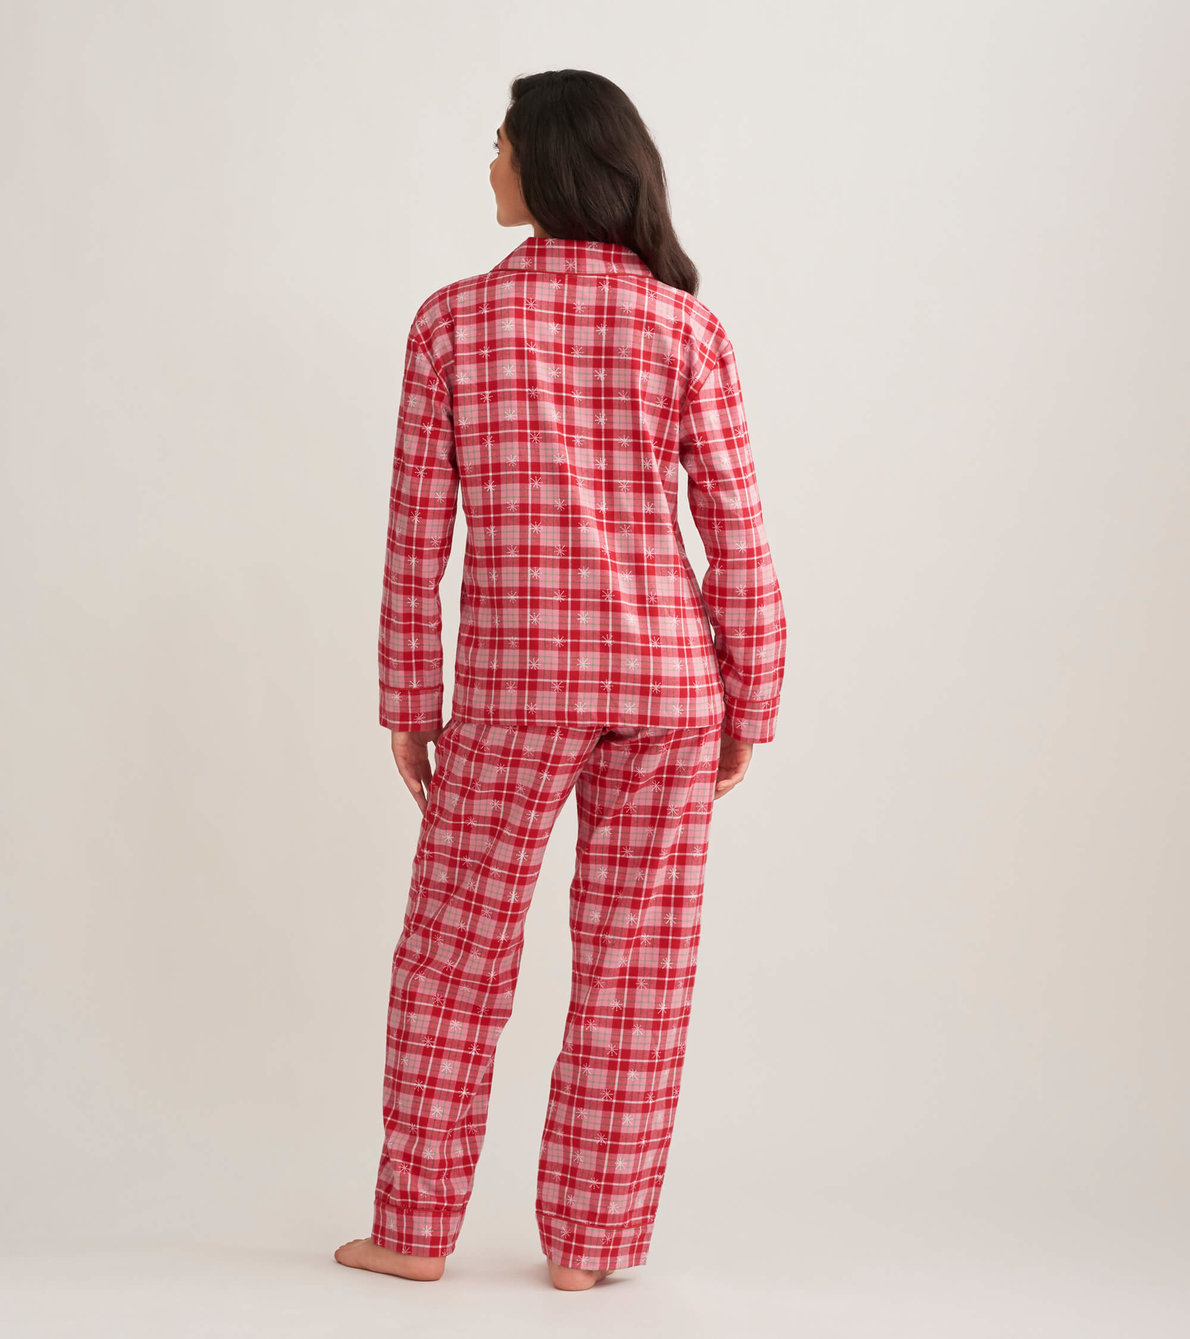 View larger image of Retro Christmas Plaid Women's Flannel Pajama Set